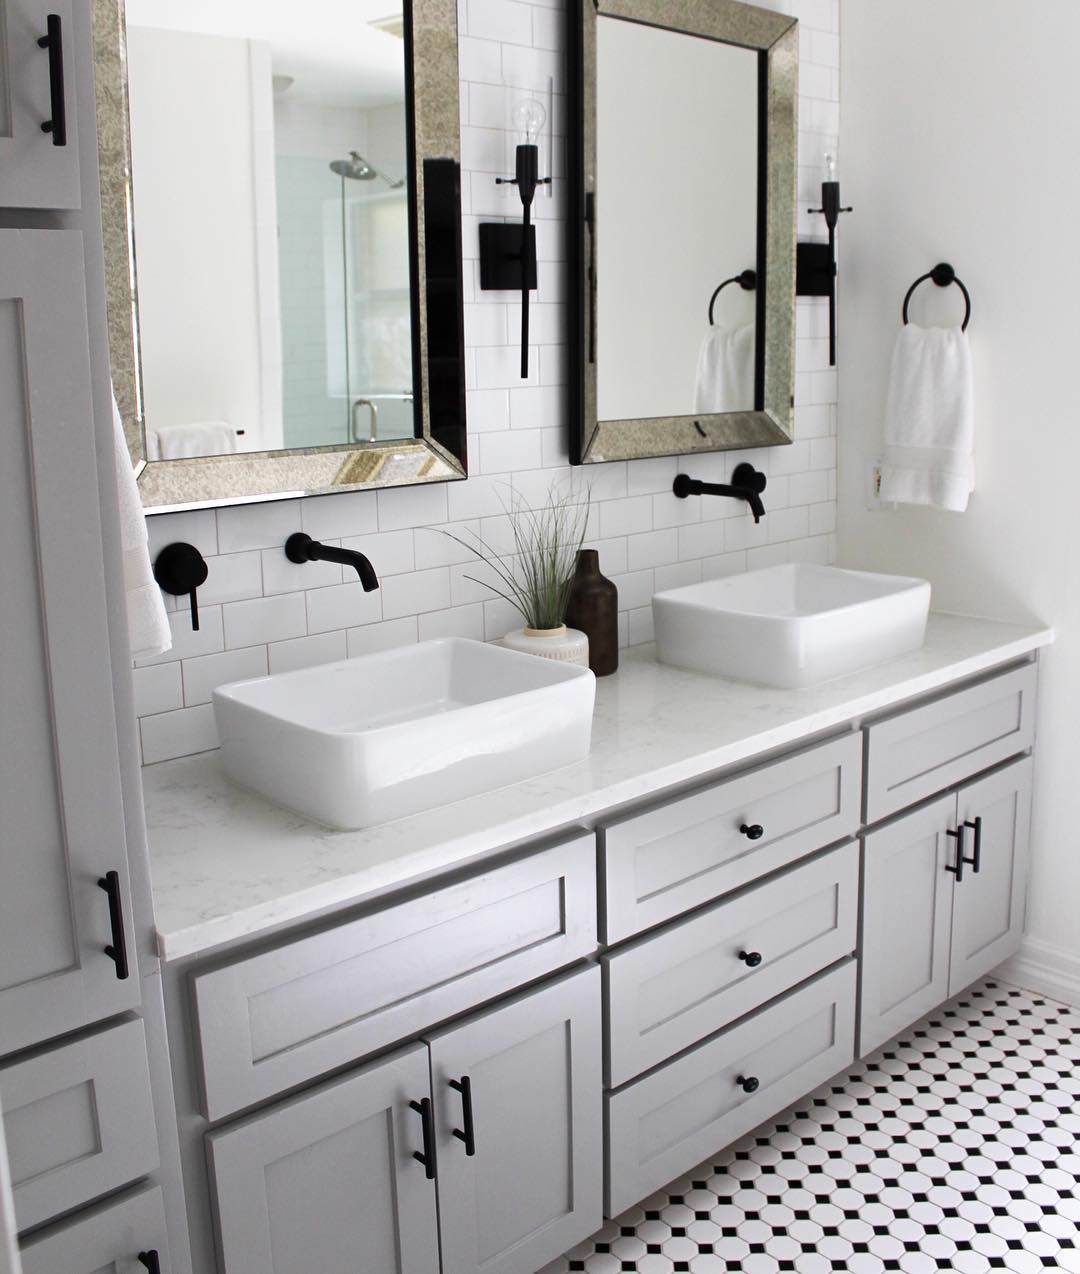 Shabby Chic Bathroom Decor Designs And Inspiration Homeshabby